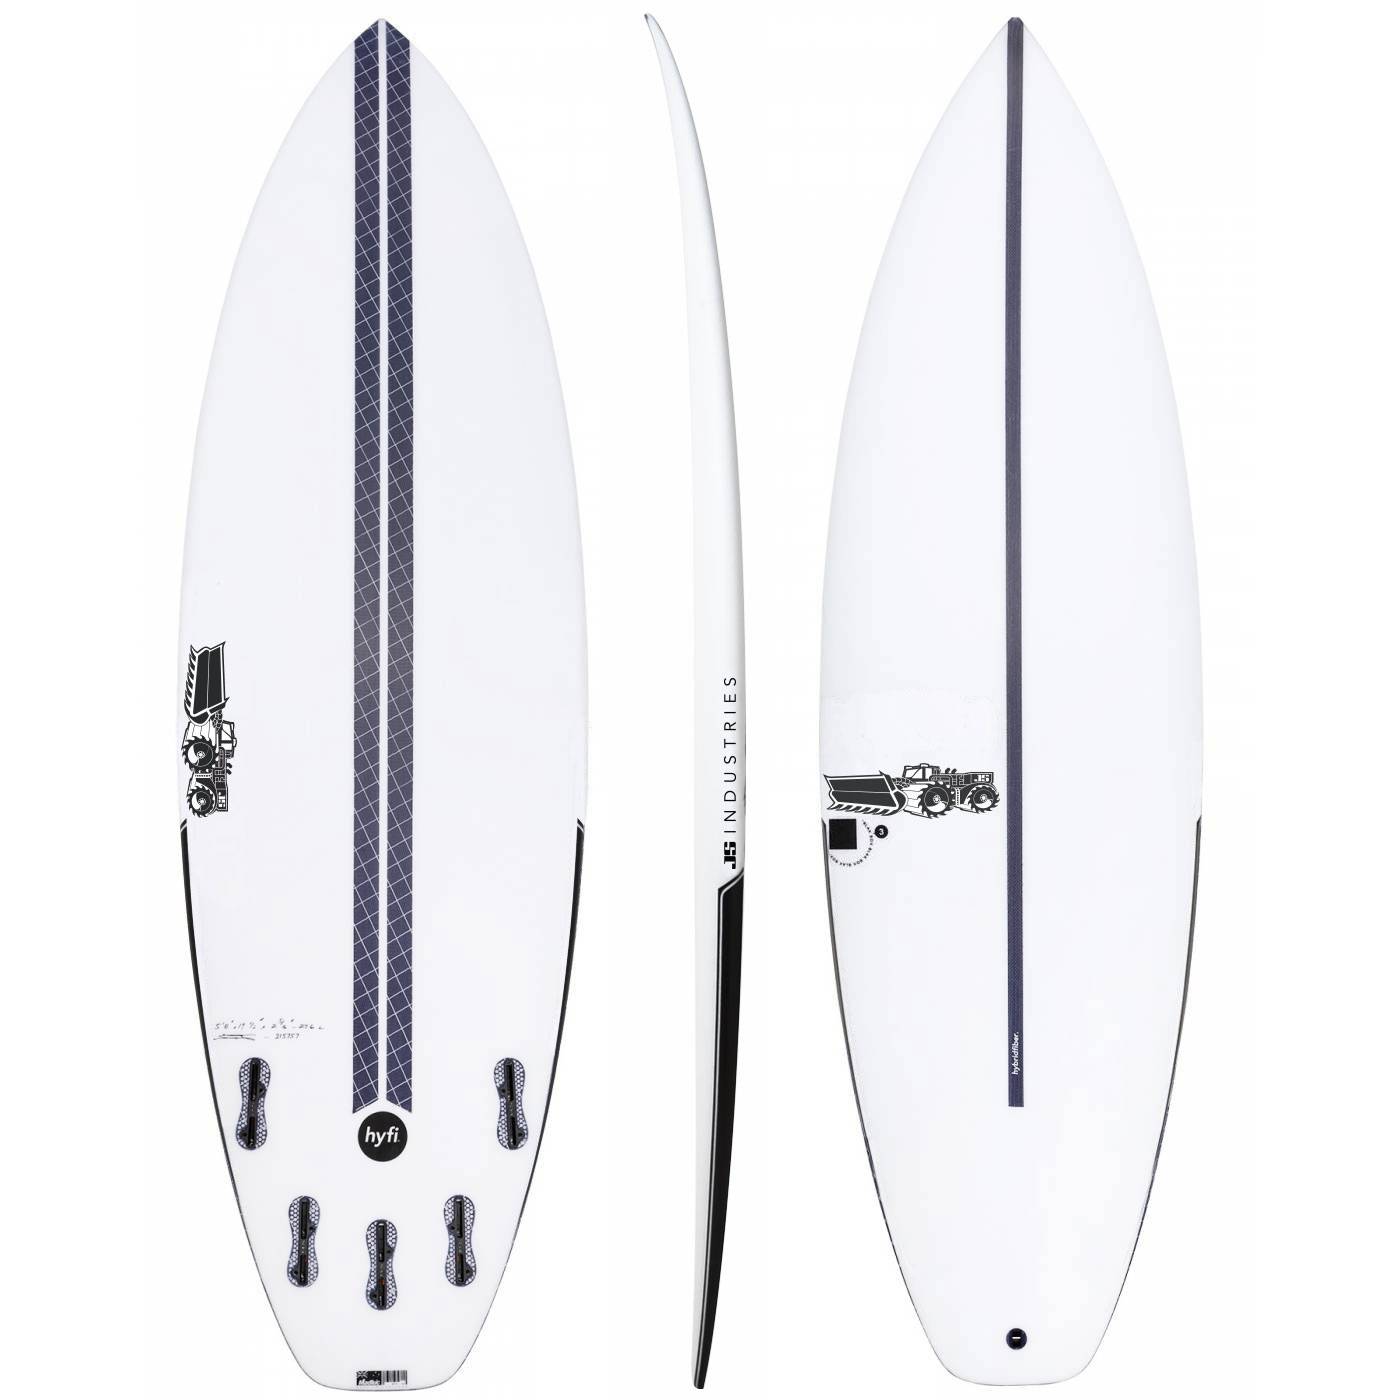 JS BLAK BOX 3 HYFI 6'4 SURFBOARD – South Coast Surf Shops Online